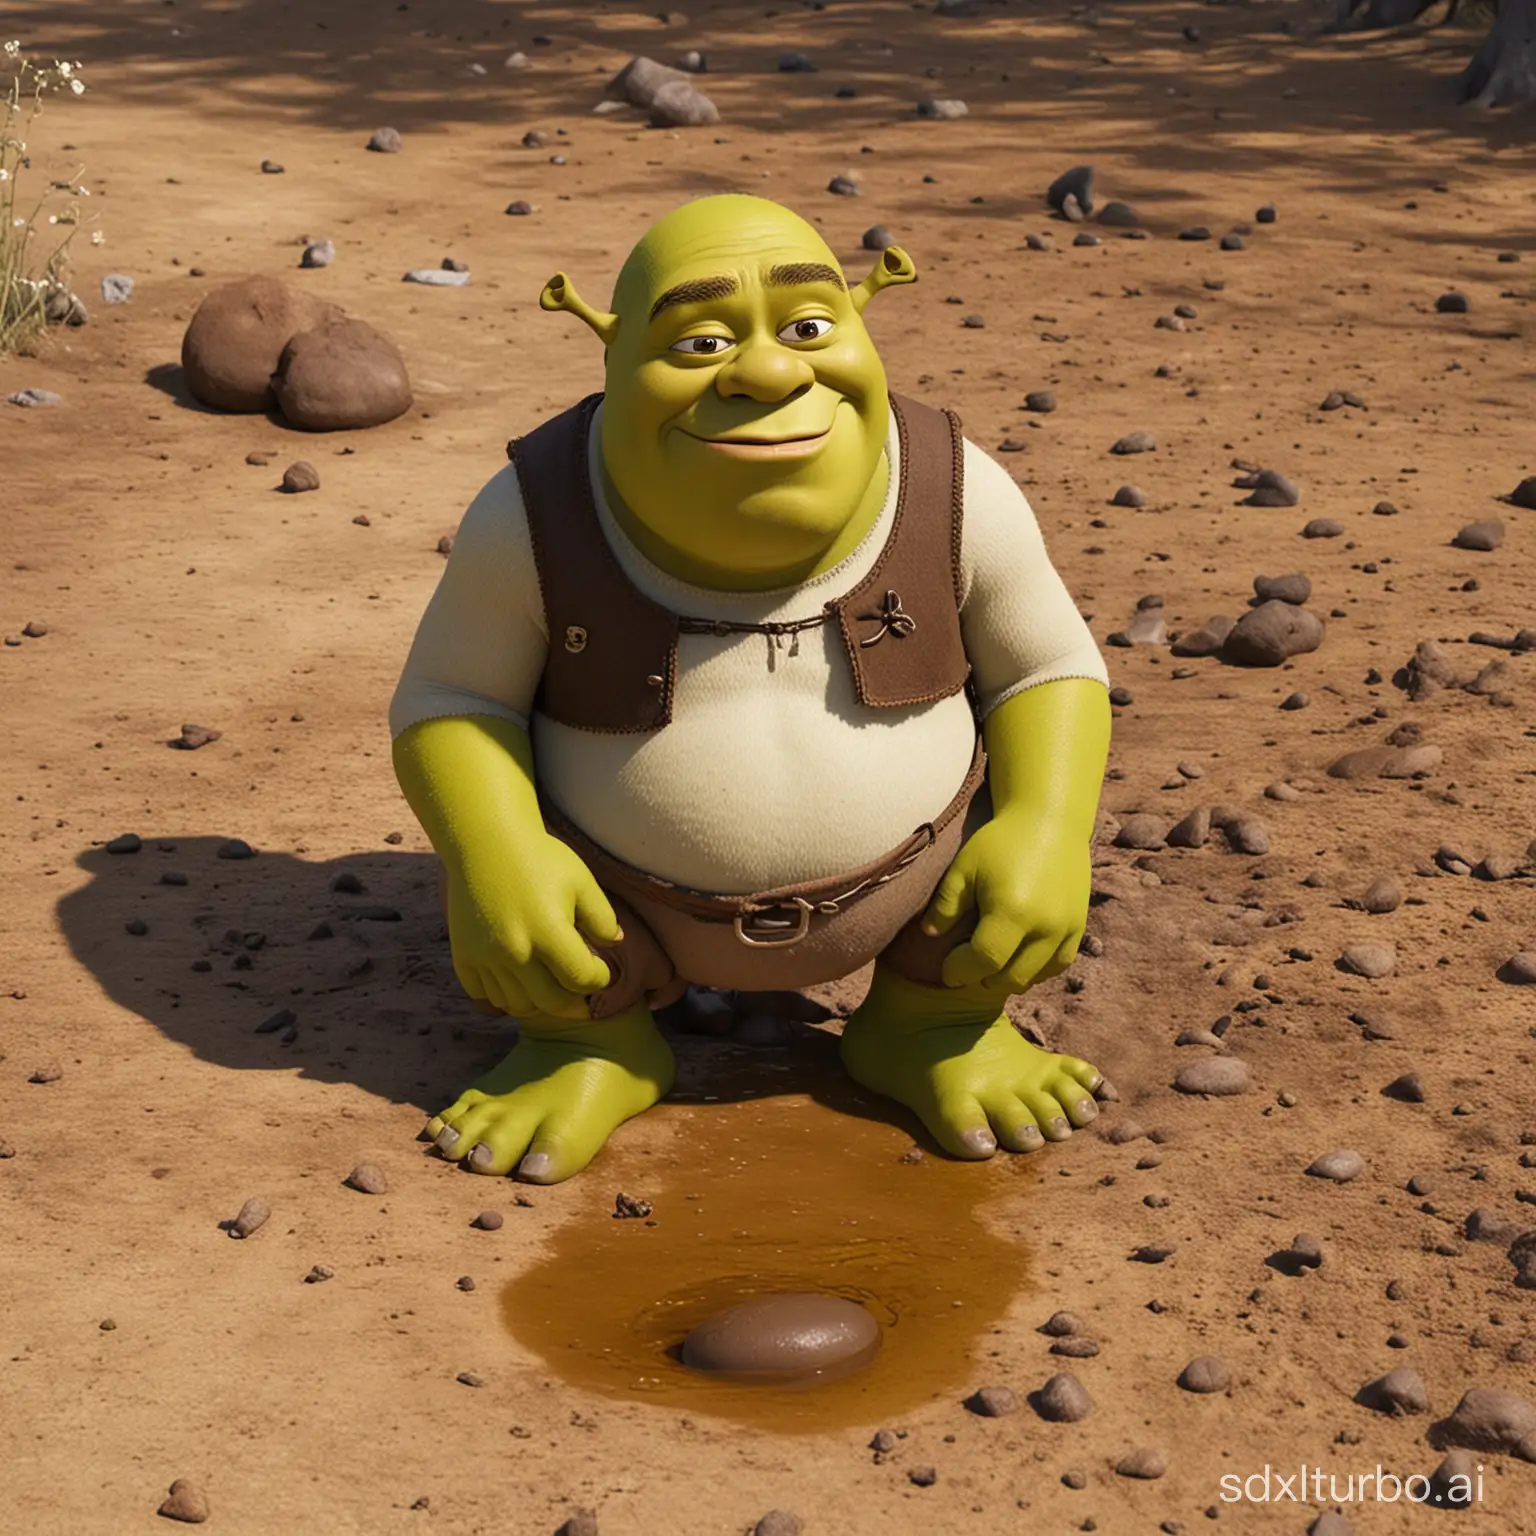 Shrek-Poops-Diarrhea-Comedic-Scene-with-Unusual-Action